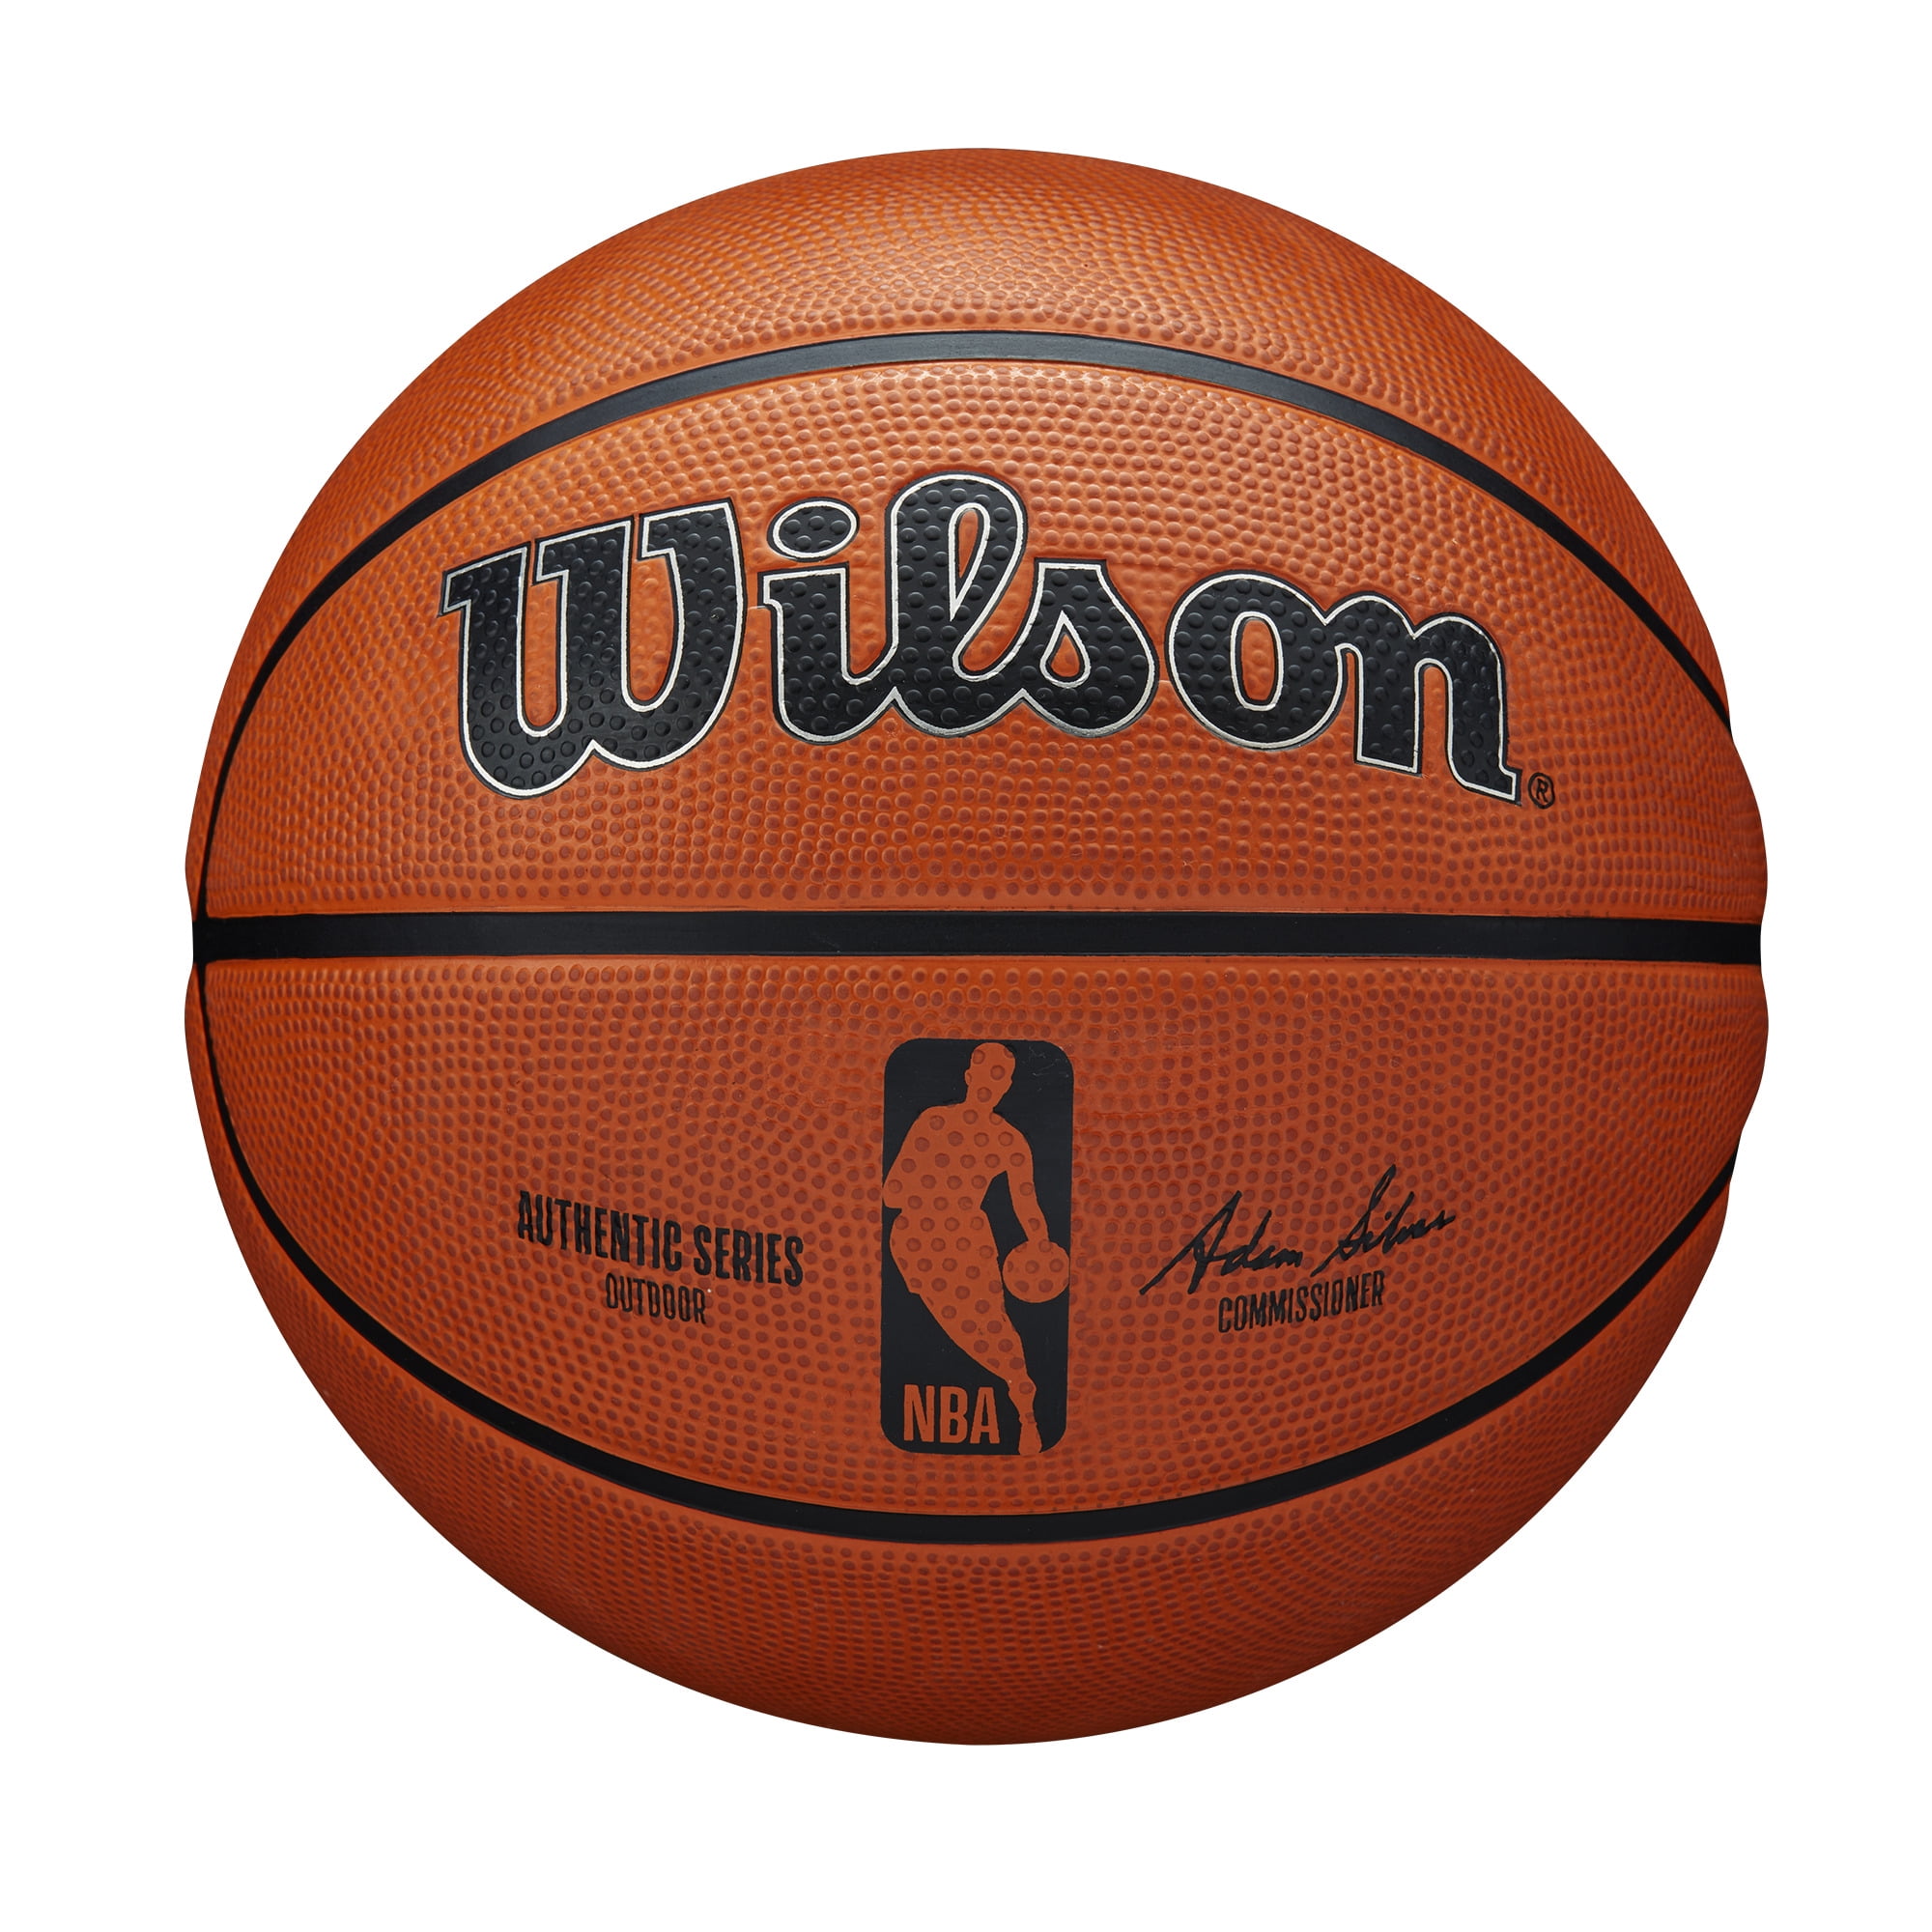 AND1 Supreme Grip Spongetech Rubber Basketball Regulation Size Streetball 29.5" 